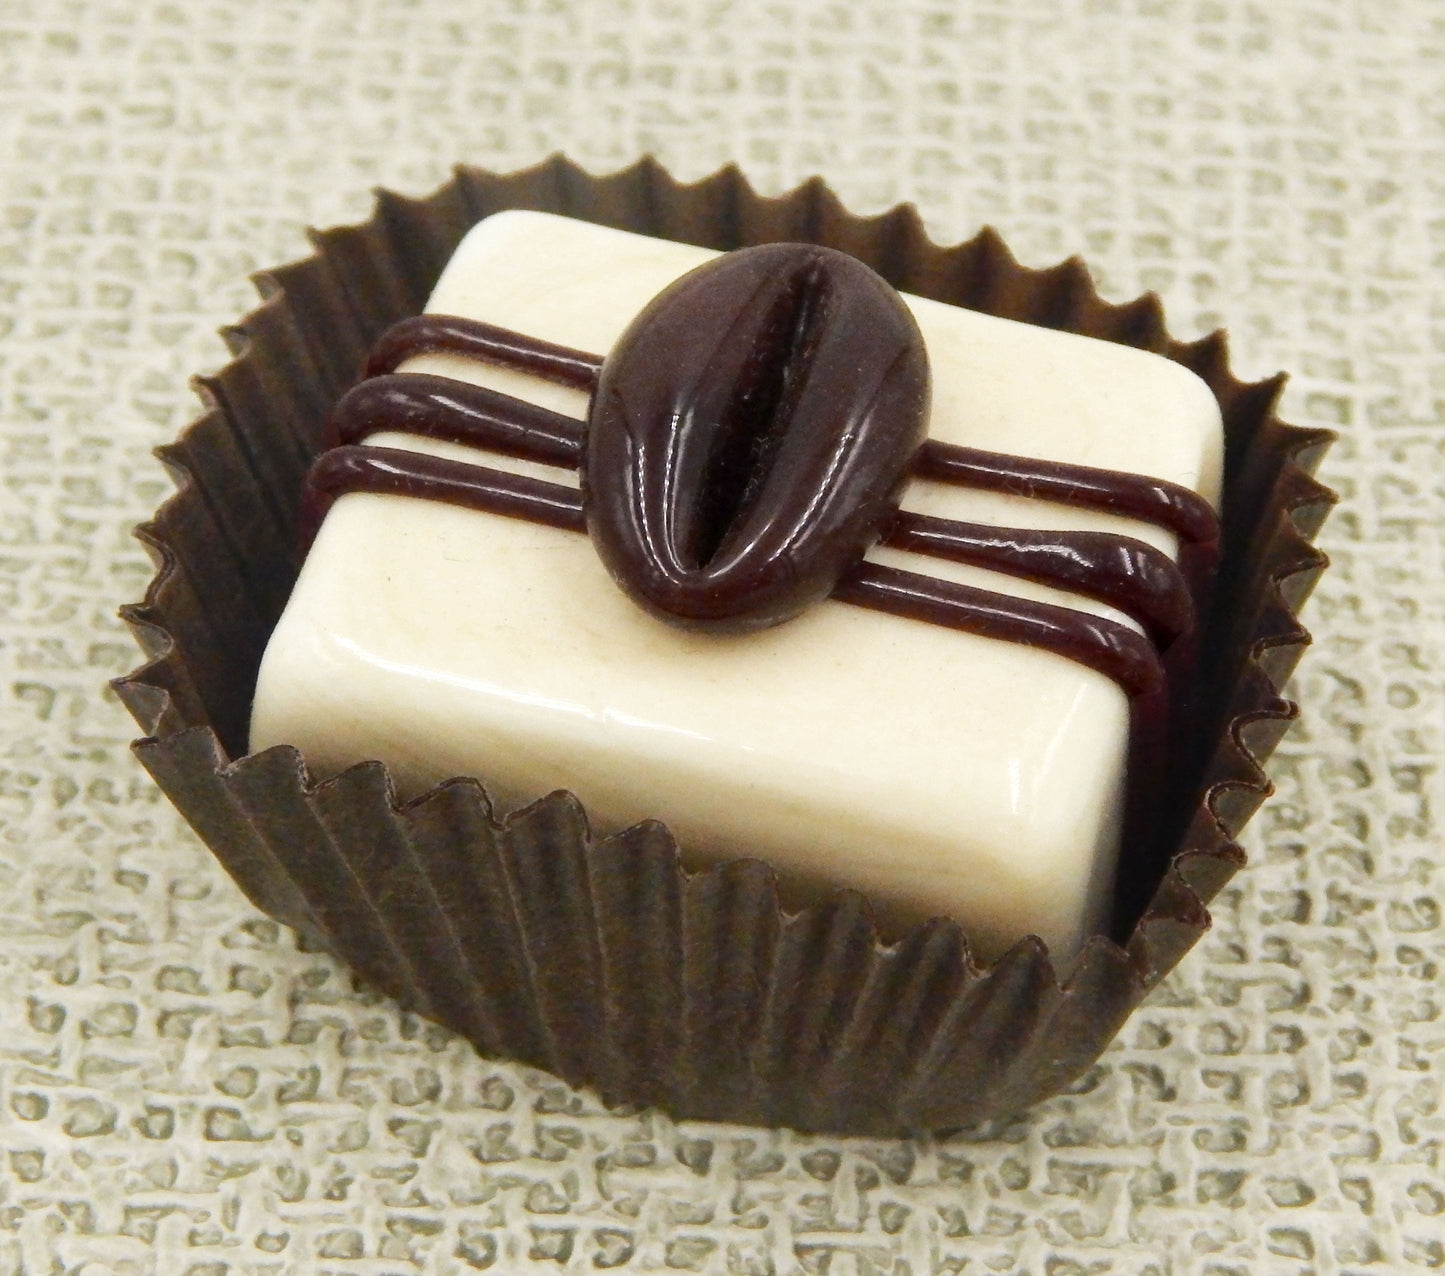 Chocolate Treat with Coffee Bean (12-028+)